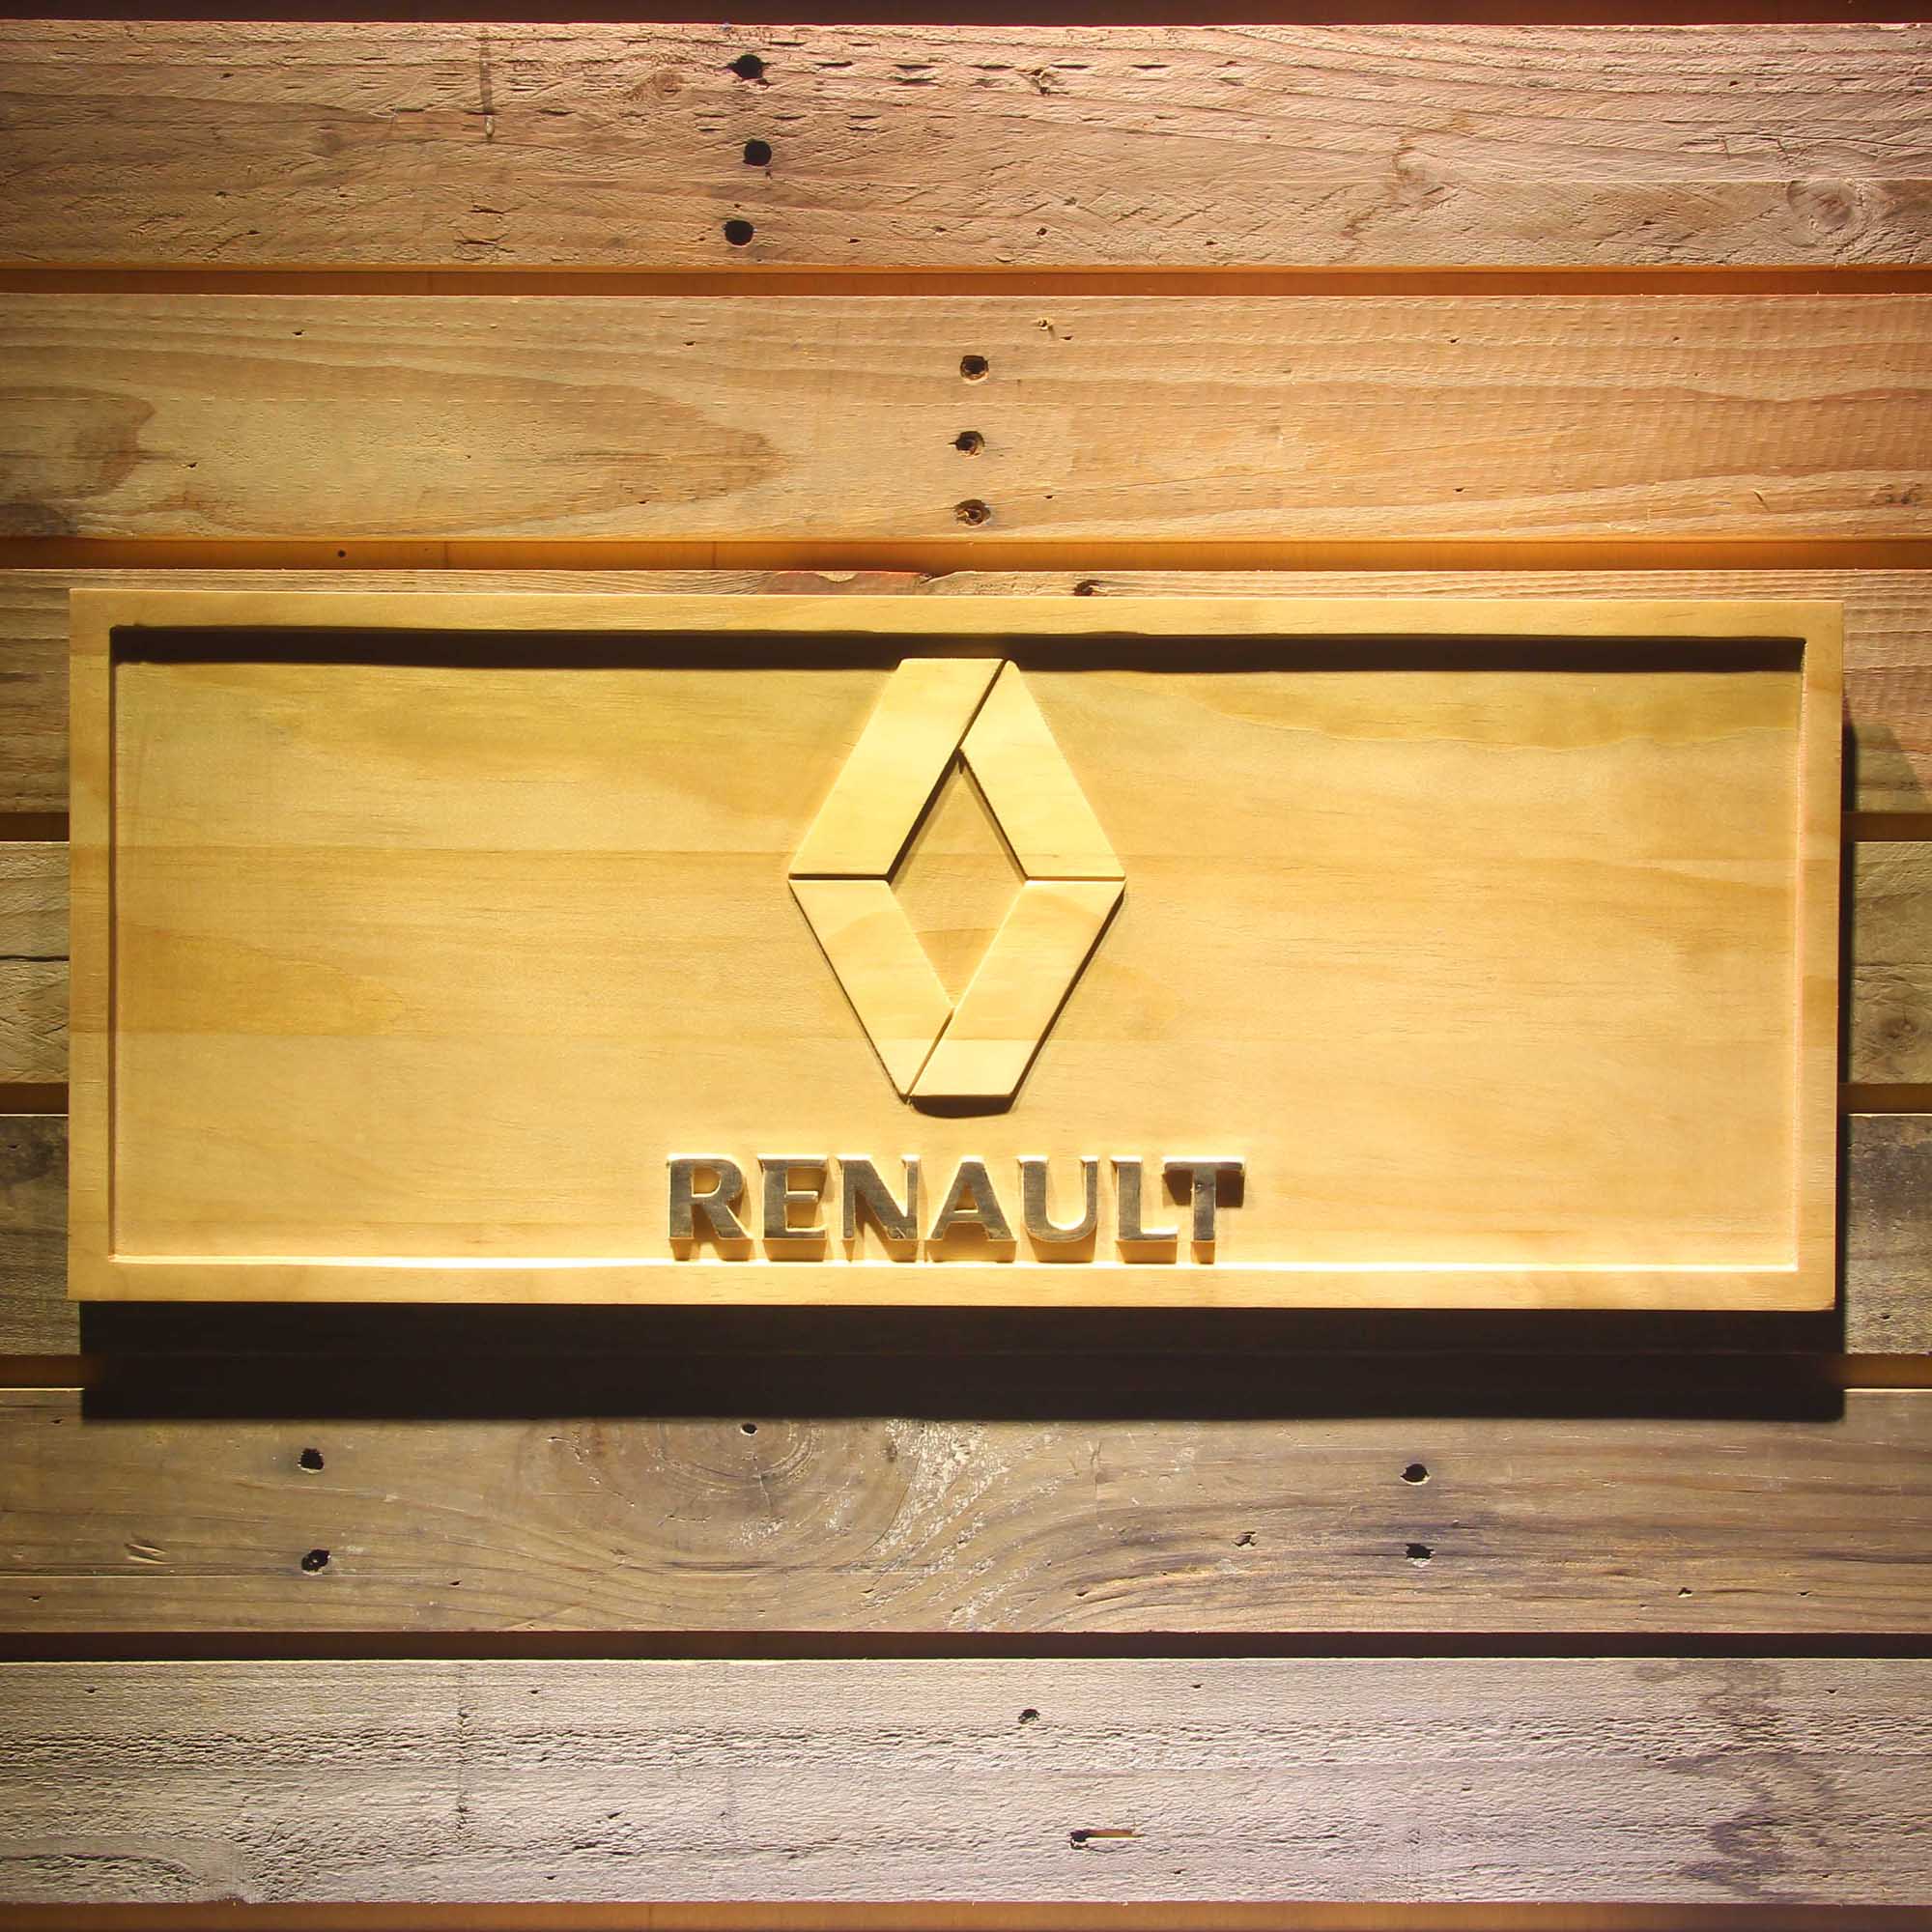 Renault 3D Wooden Engrave Sign